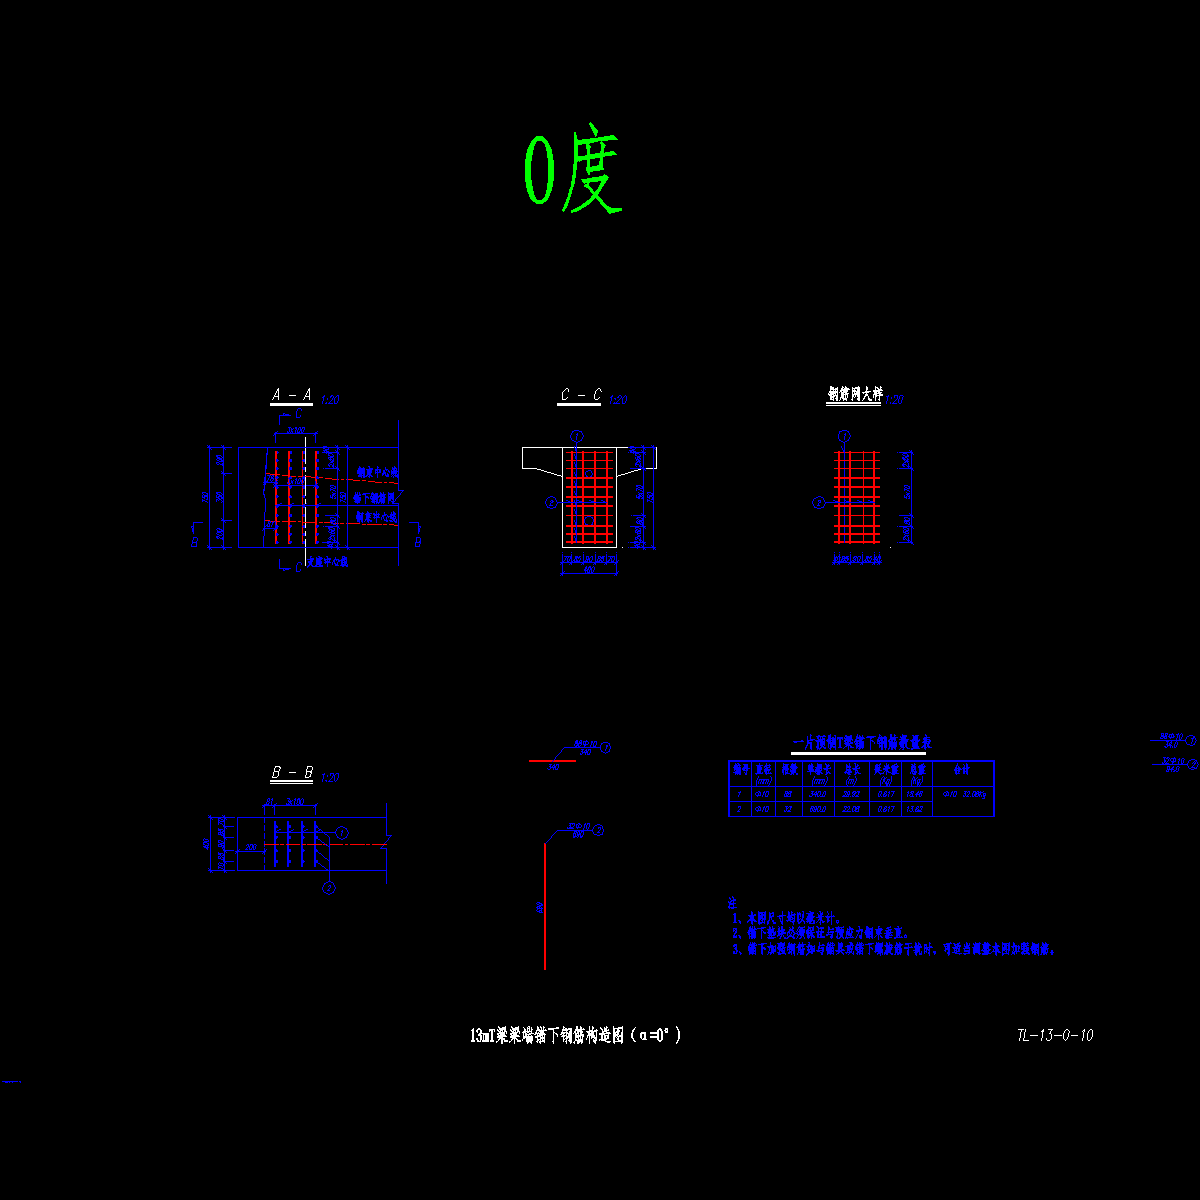 tl-13-0-10-13mt梁梁端锚下钢筋构造图（α=0°).dwg